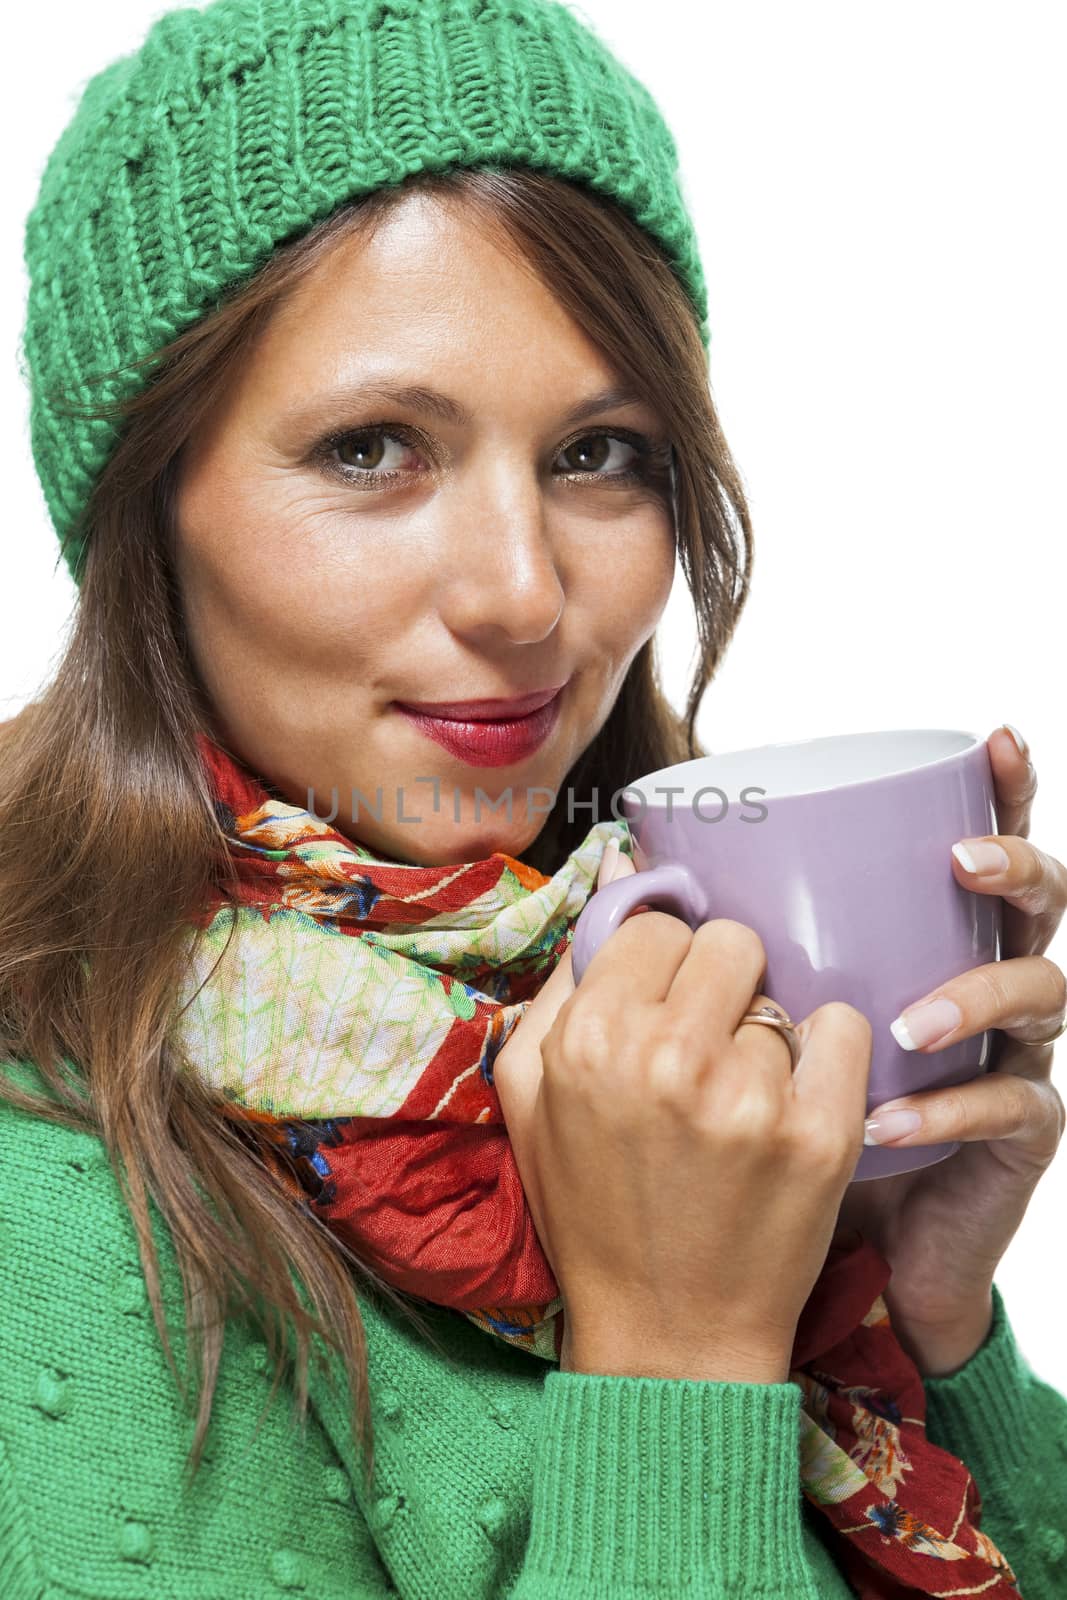 Pretty Woman in Winter Fashion Drinking Coffee by juniart